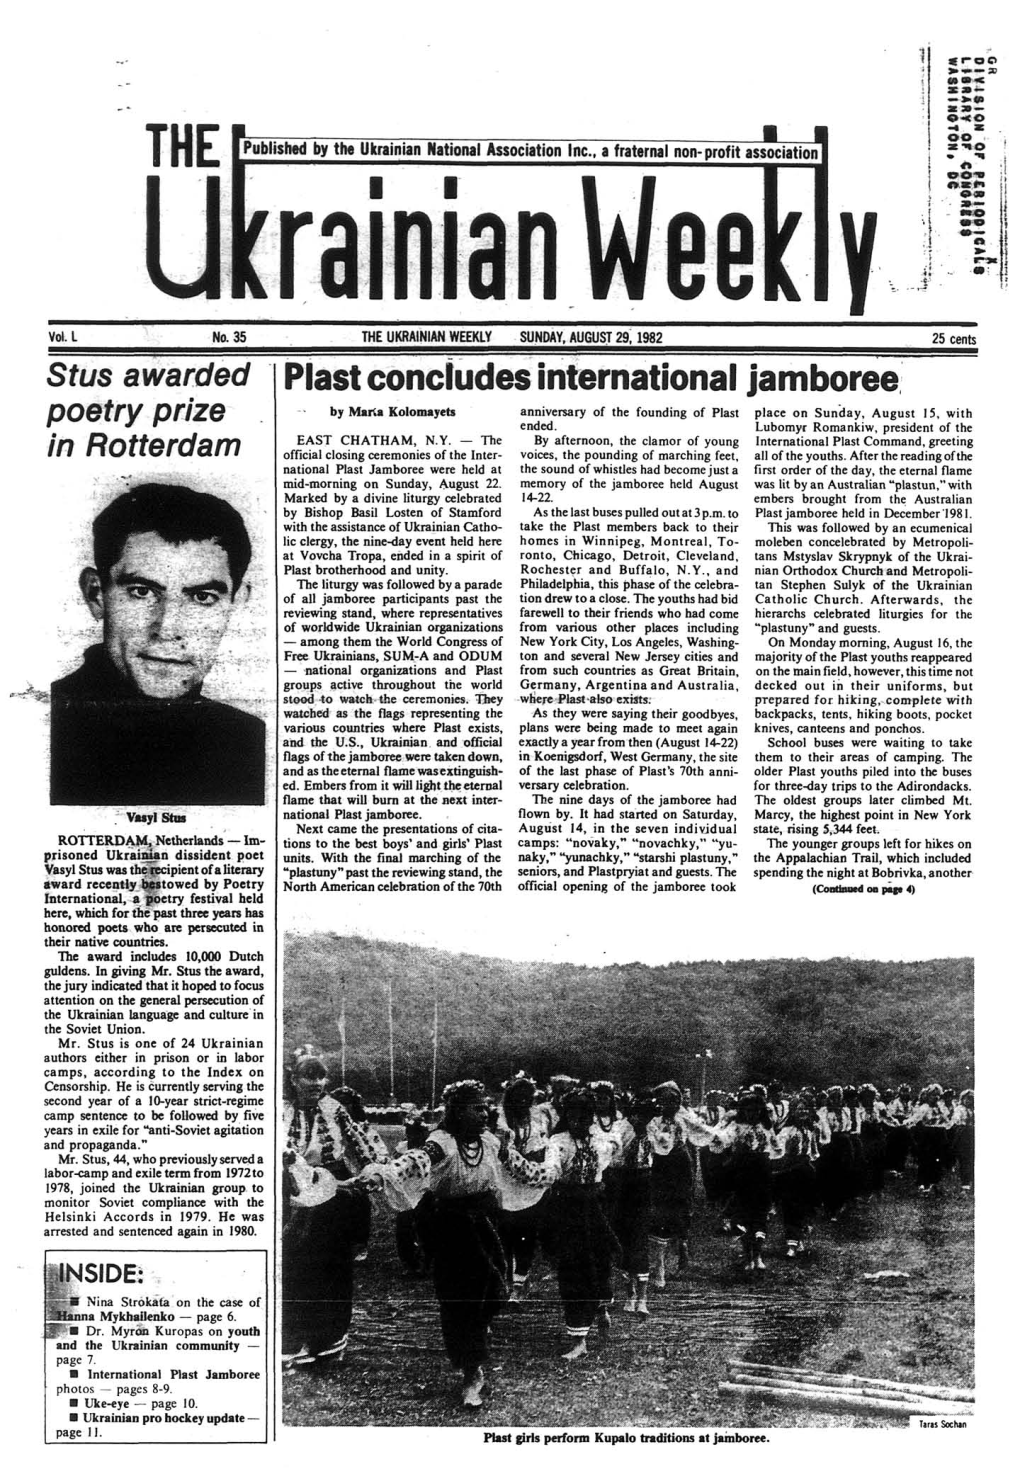 The Ukrainian Weekly 1982, No.35